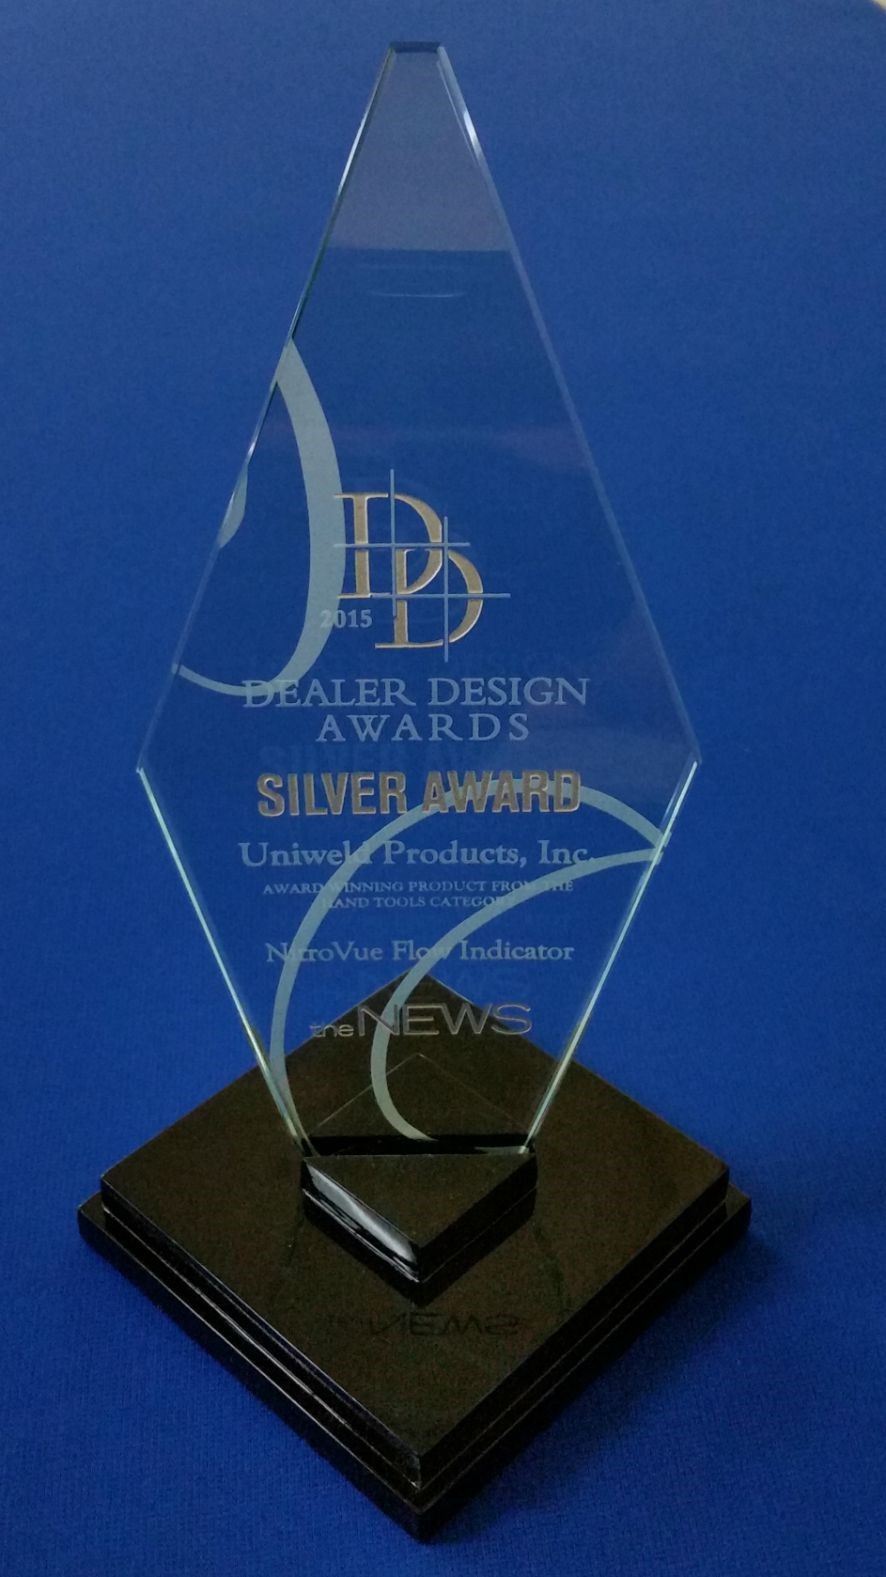 2015 Dealer Design Award